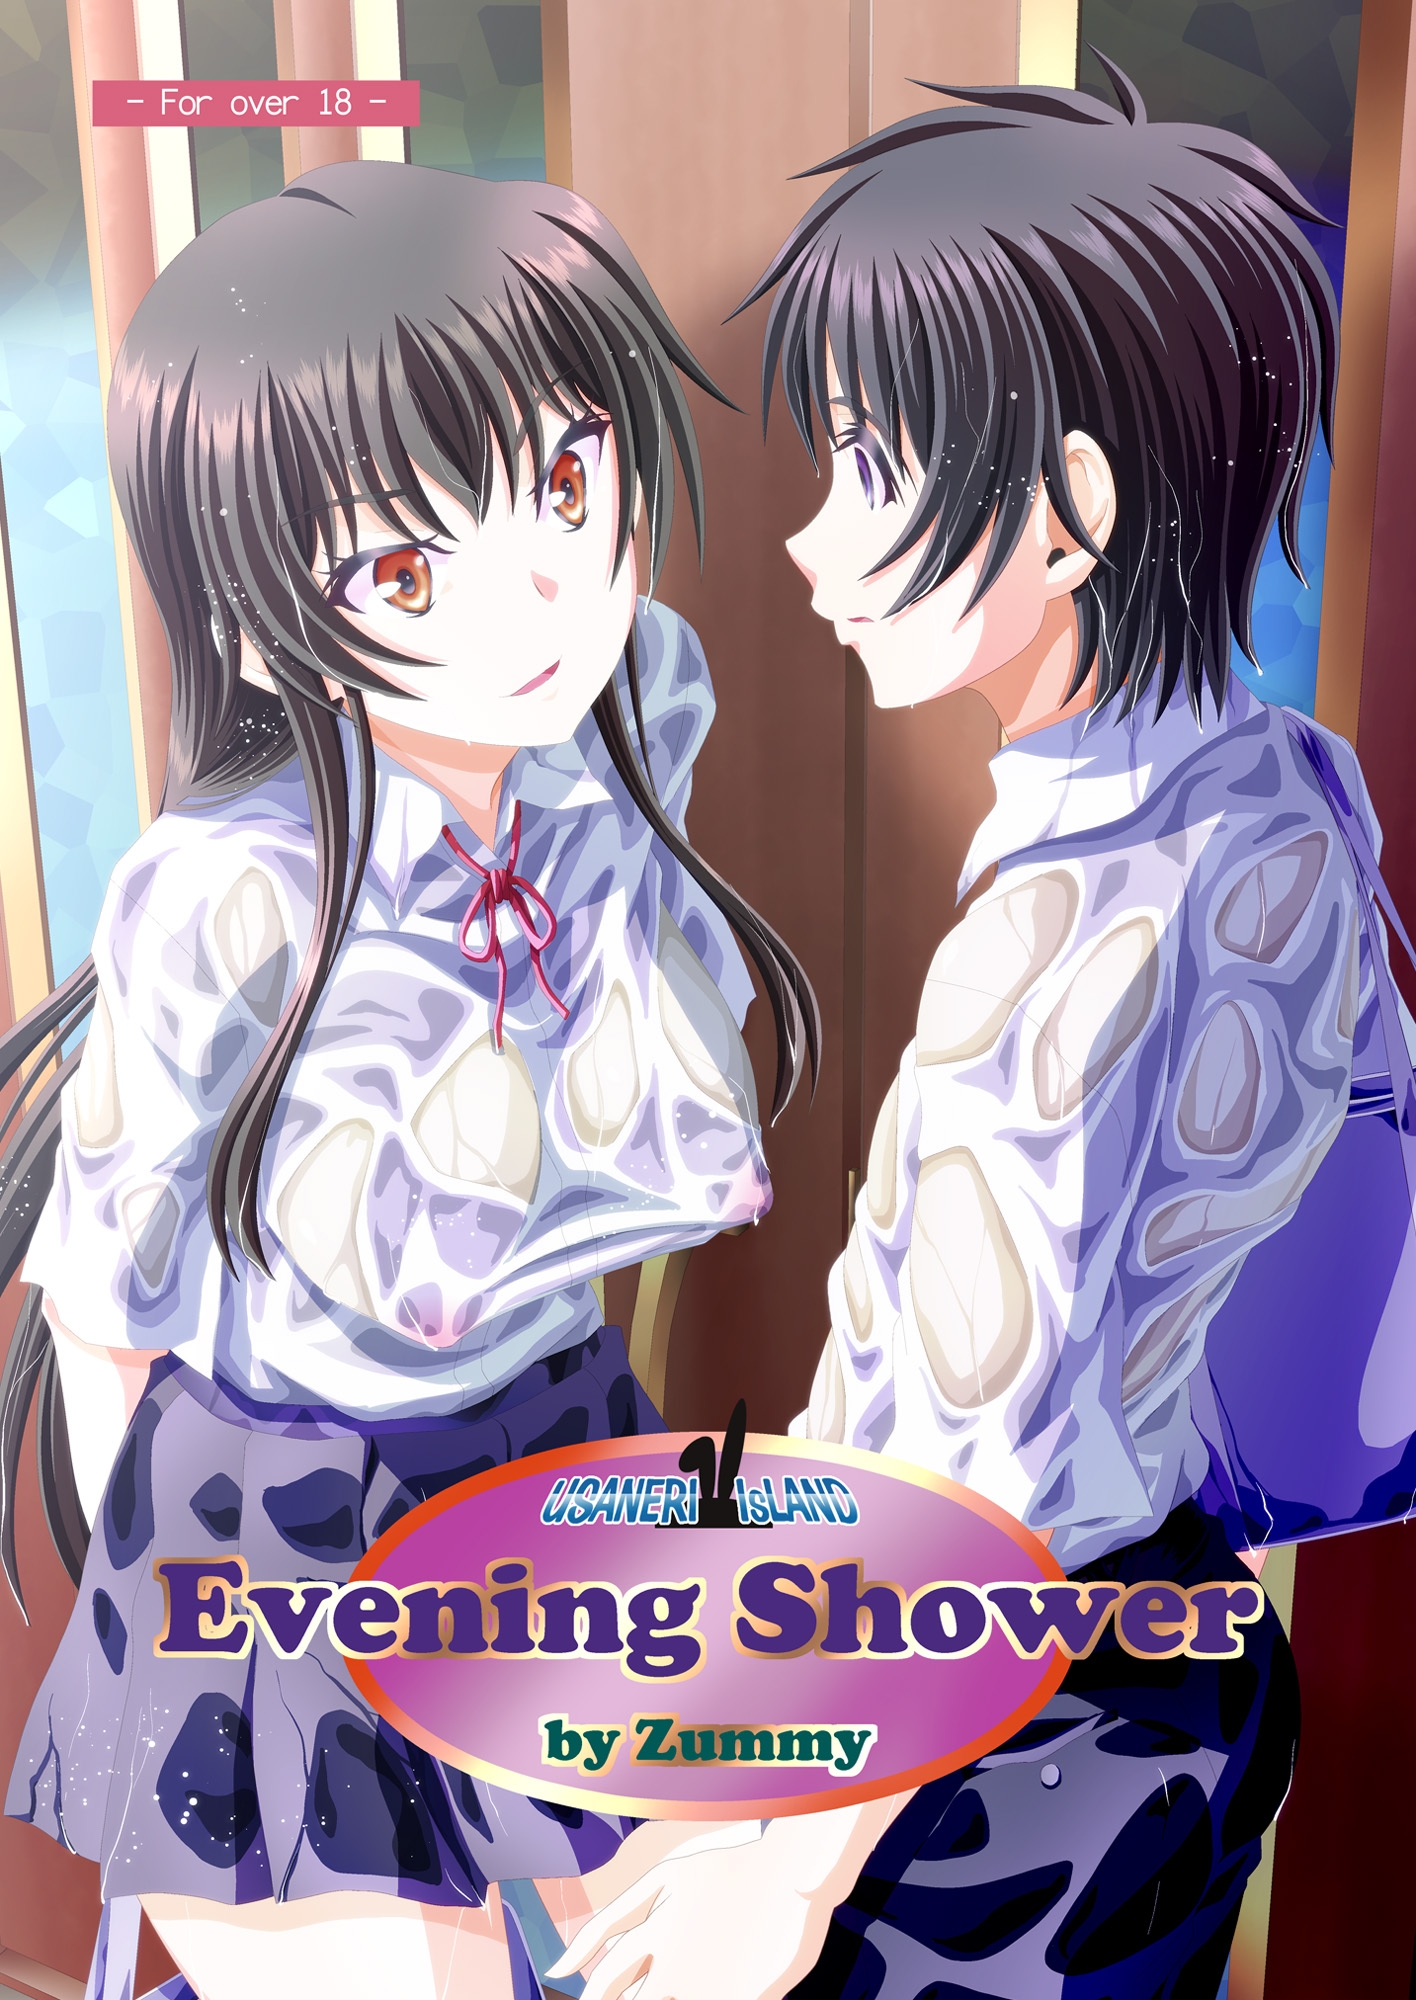 Evening Shower